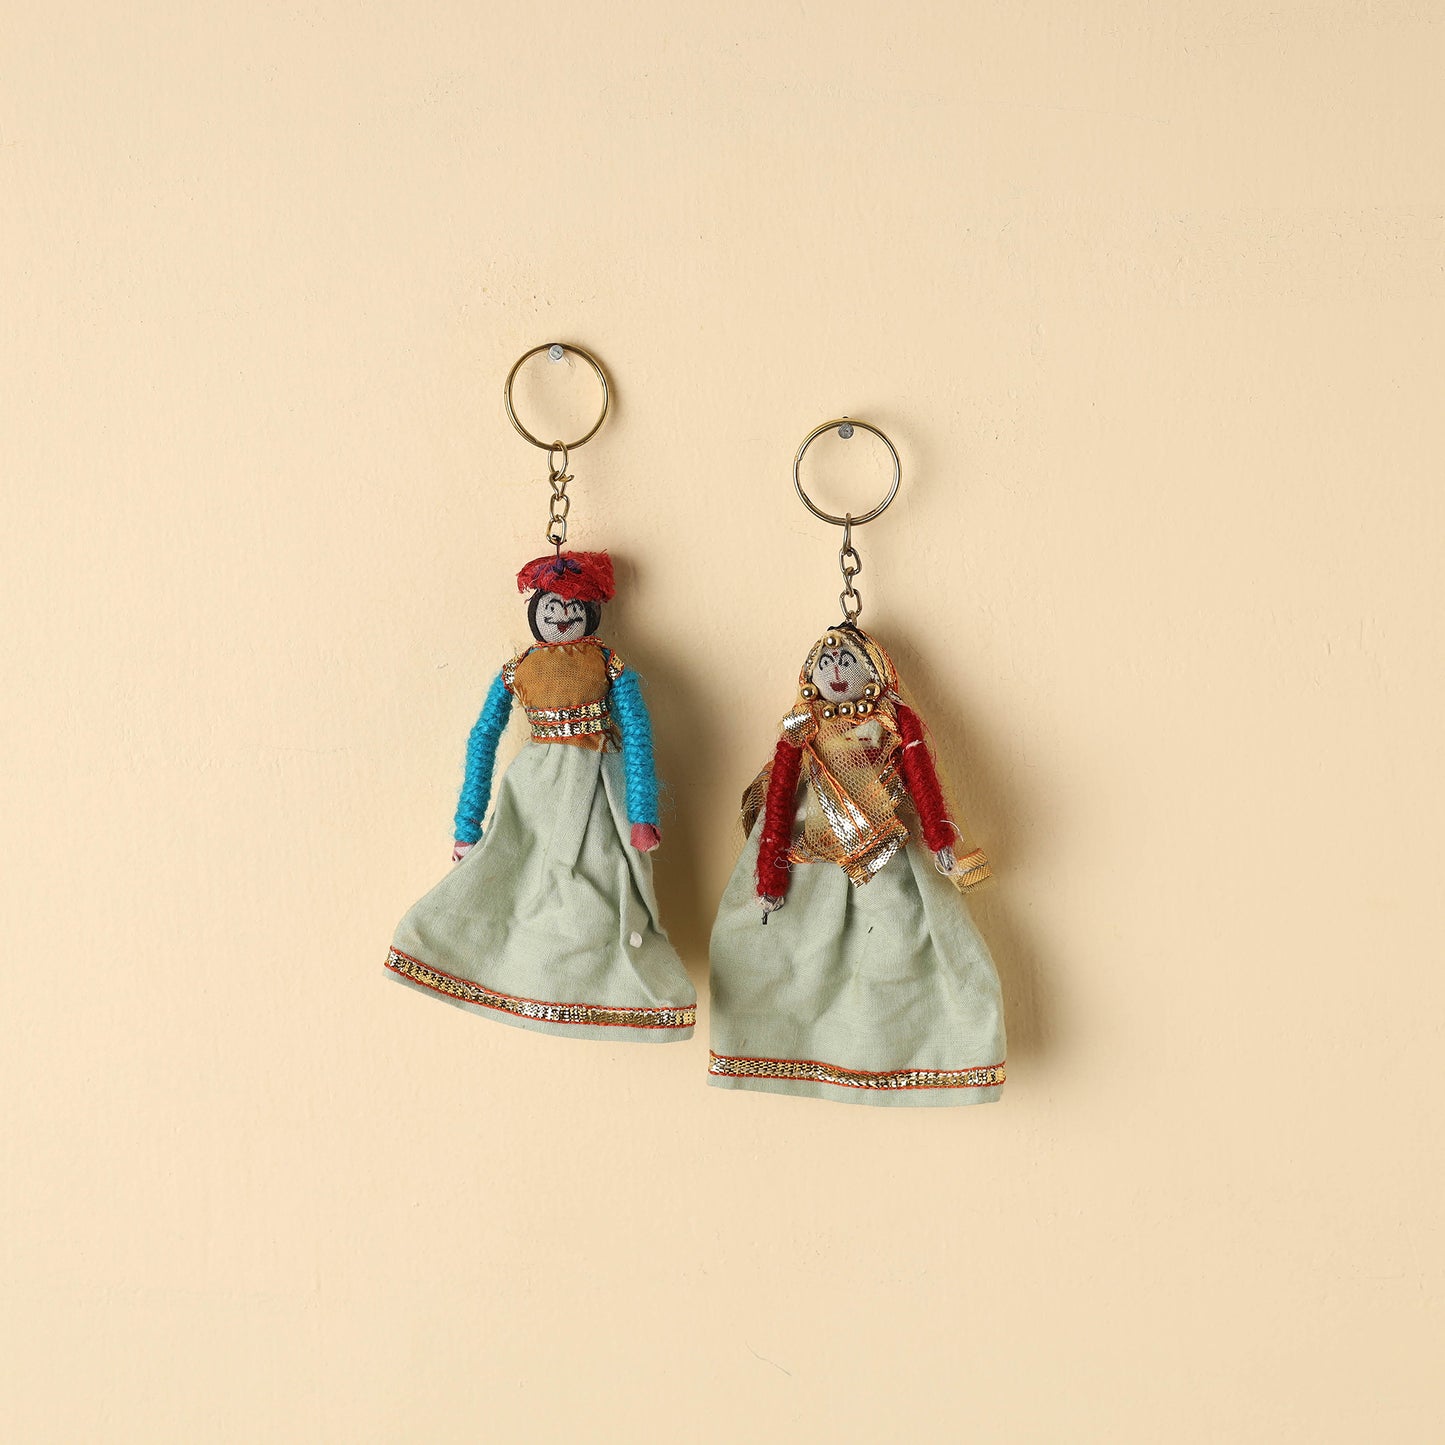 Rajasthani Puppet Couple Handmade Keychains (Set of 2)